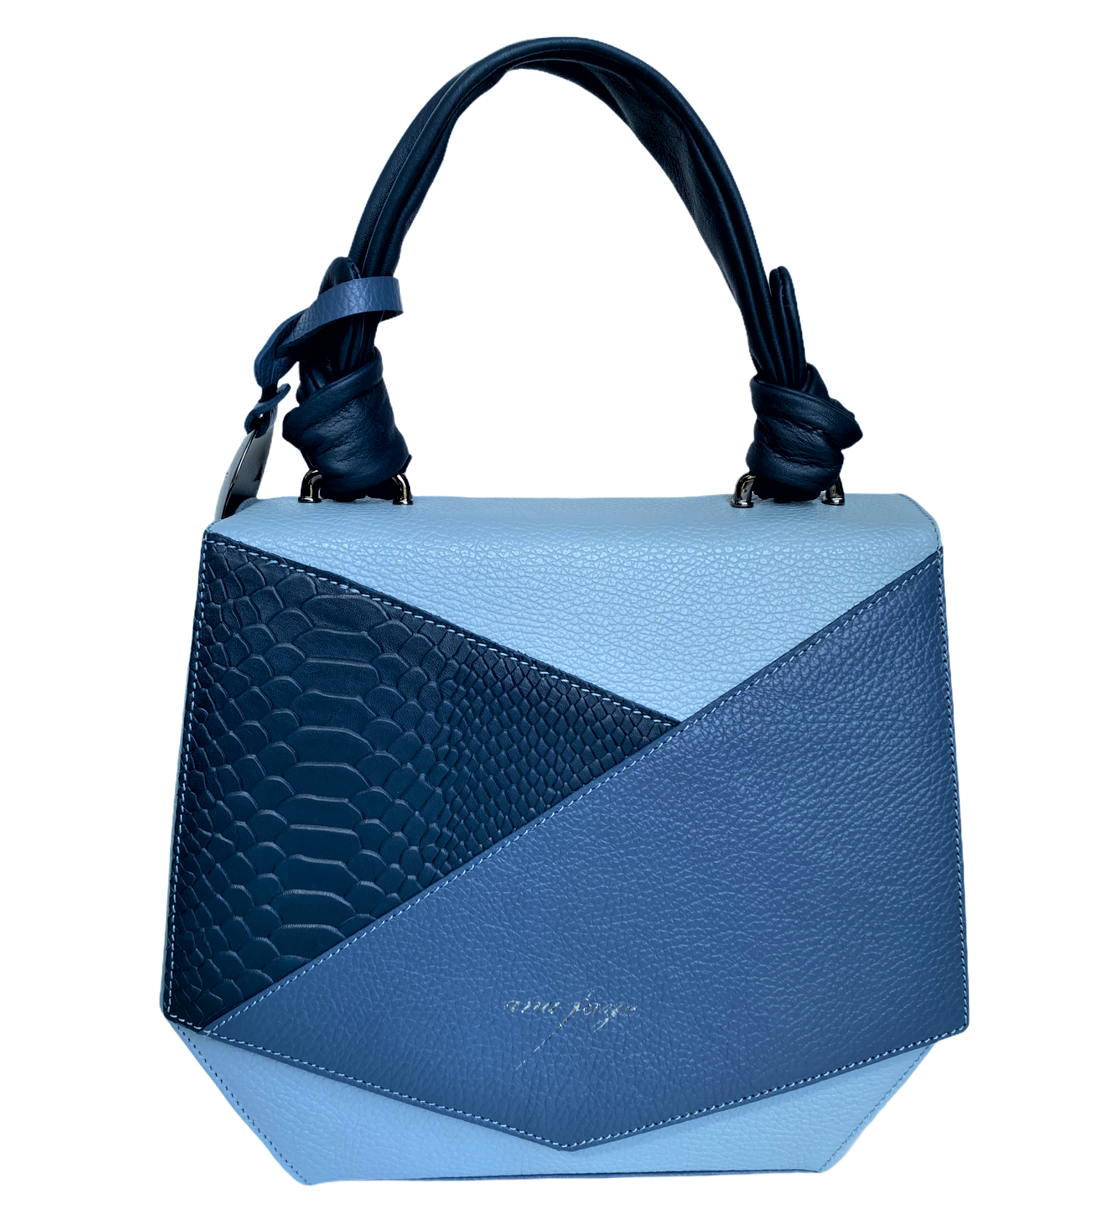 St. Pat irish artisan 3-22 ana faye blue handbag cropped.jpg